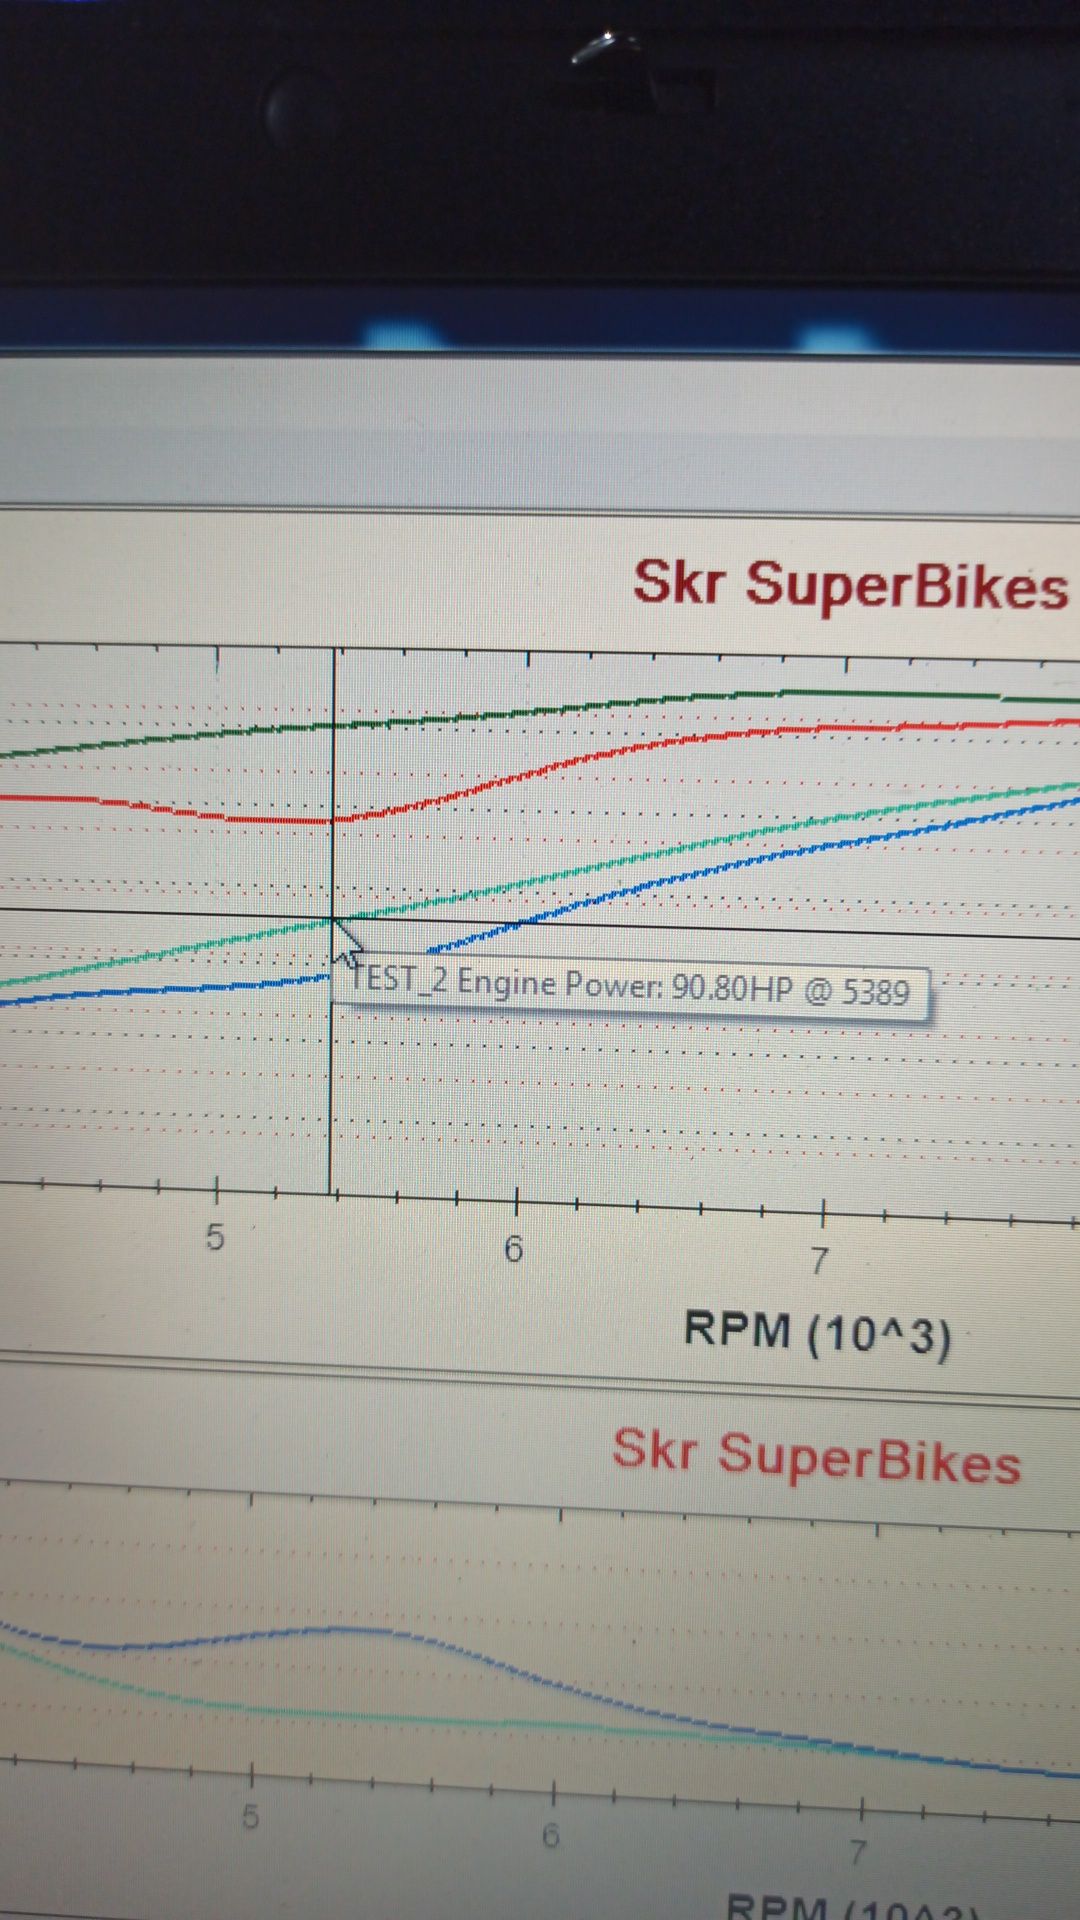 Limitare Moto A2 35kw Resoftare motociclete Tuning